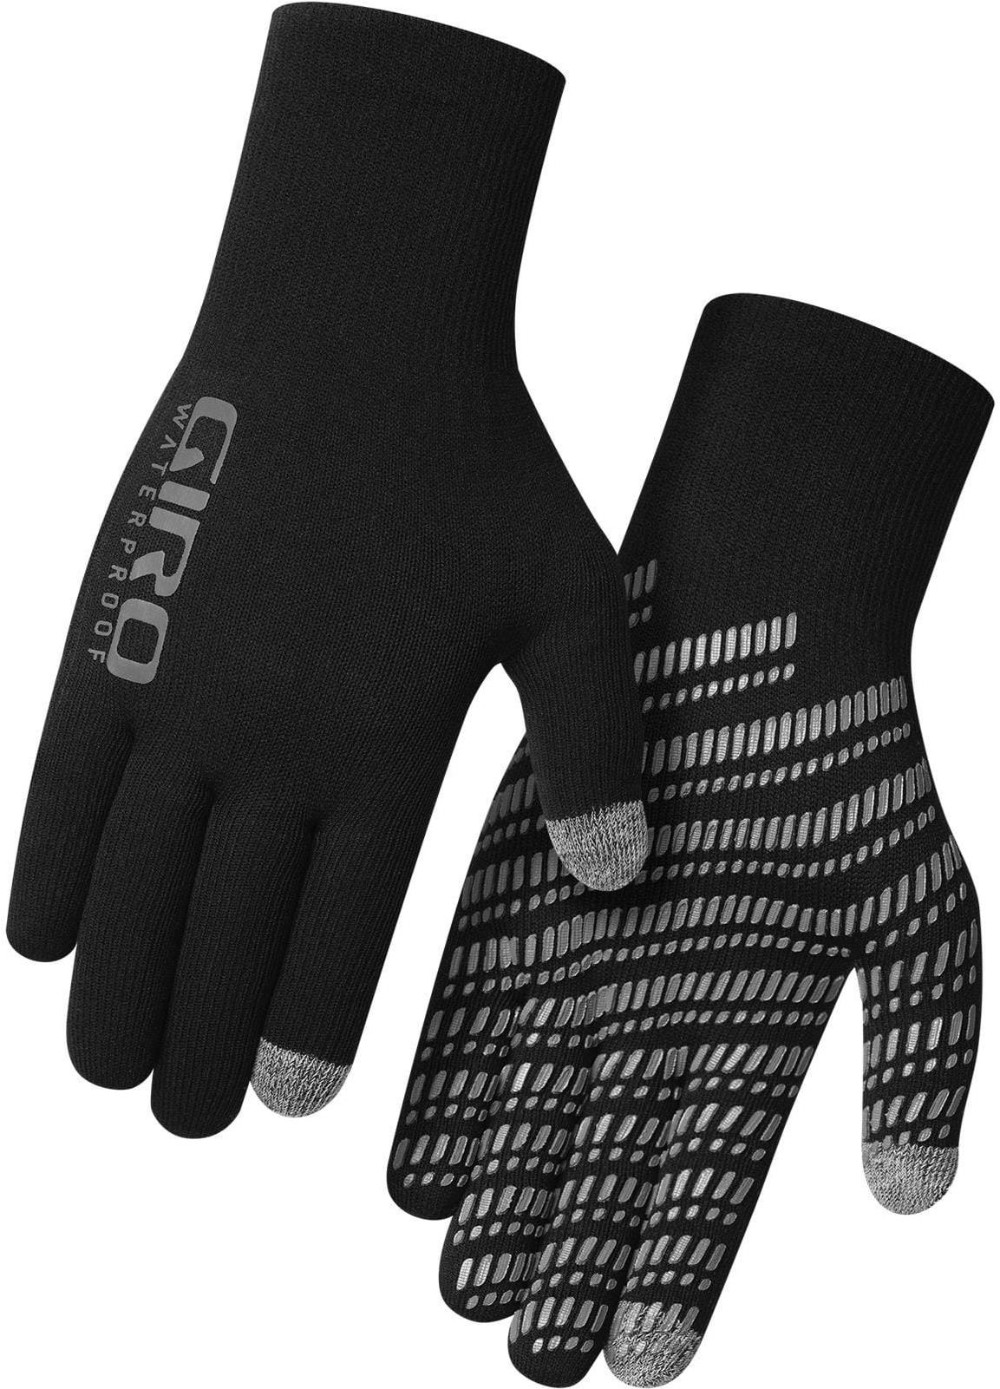 Xnetic H2O Long Finger Cycling Gloves image 0